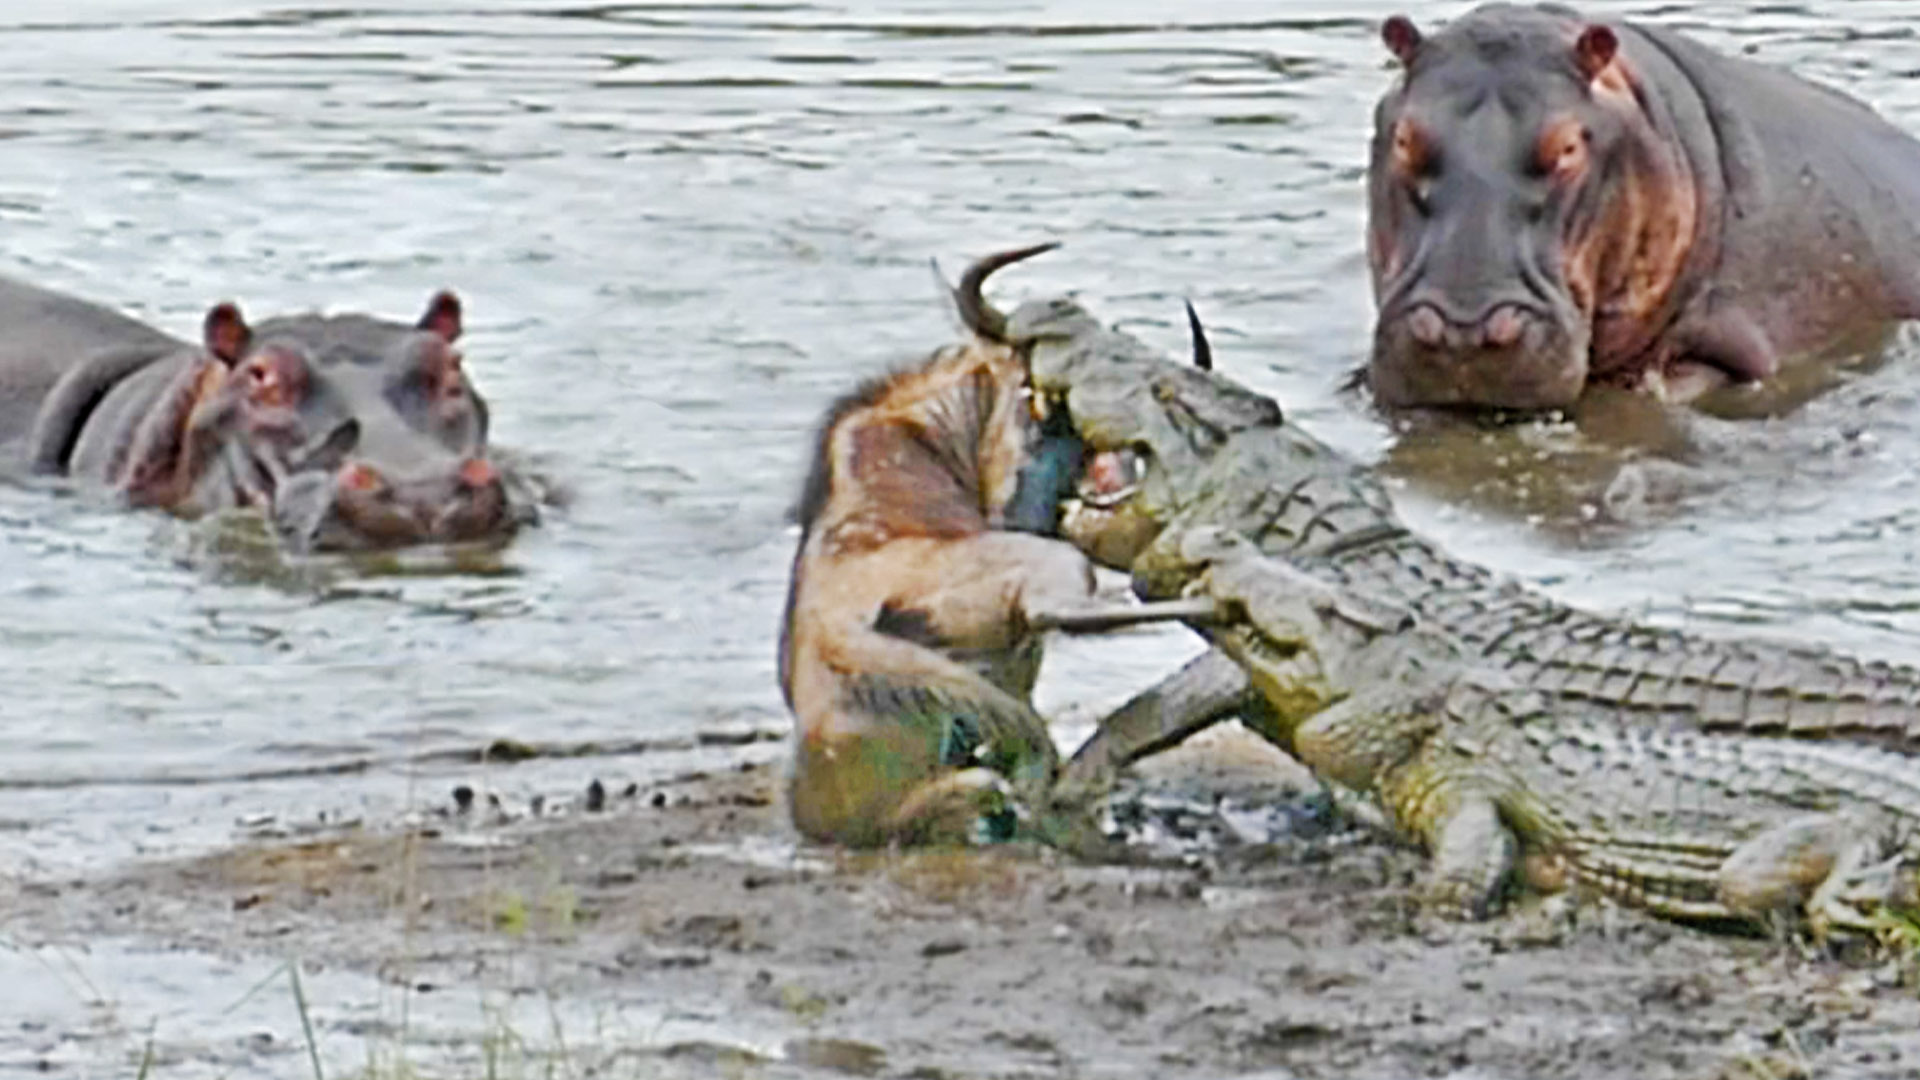 Hippos Save Wildebeest from Crocodiles!